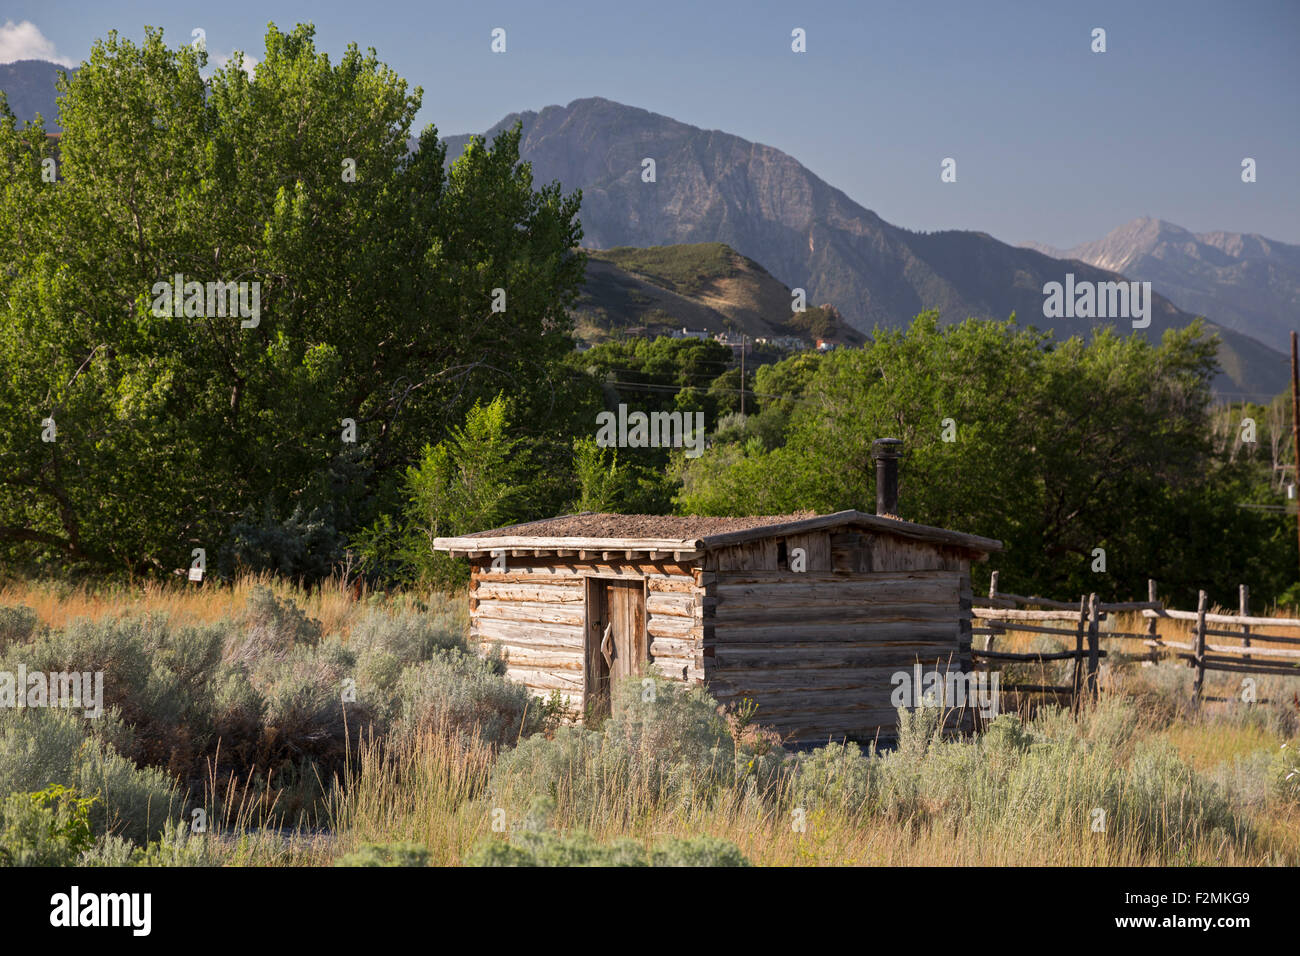 Salt Lake City, Utah - Replica Pony Express cabin in questo è il luogo Heritage Park. Foto Stock